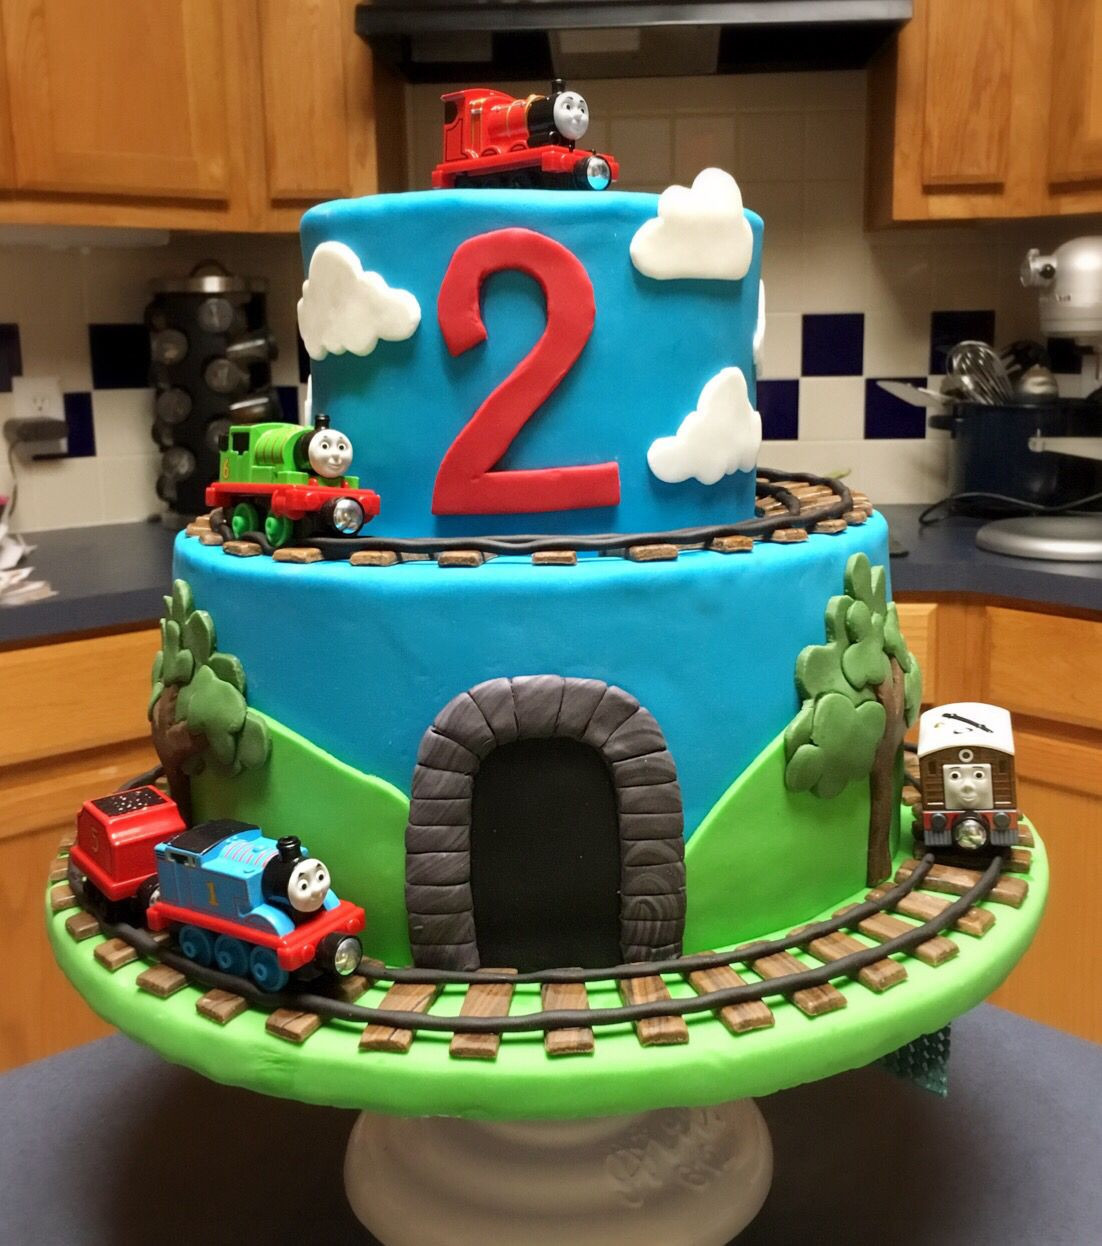 Best ideas about Thomas Birthday Cake
. Save or Pin Thomas the train cake Noah Pinterest Now.